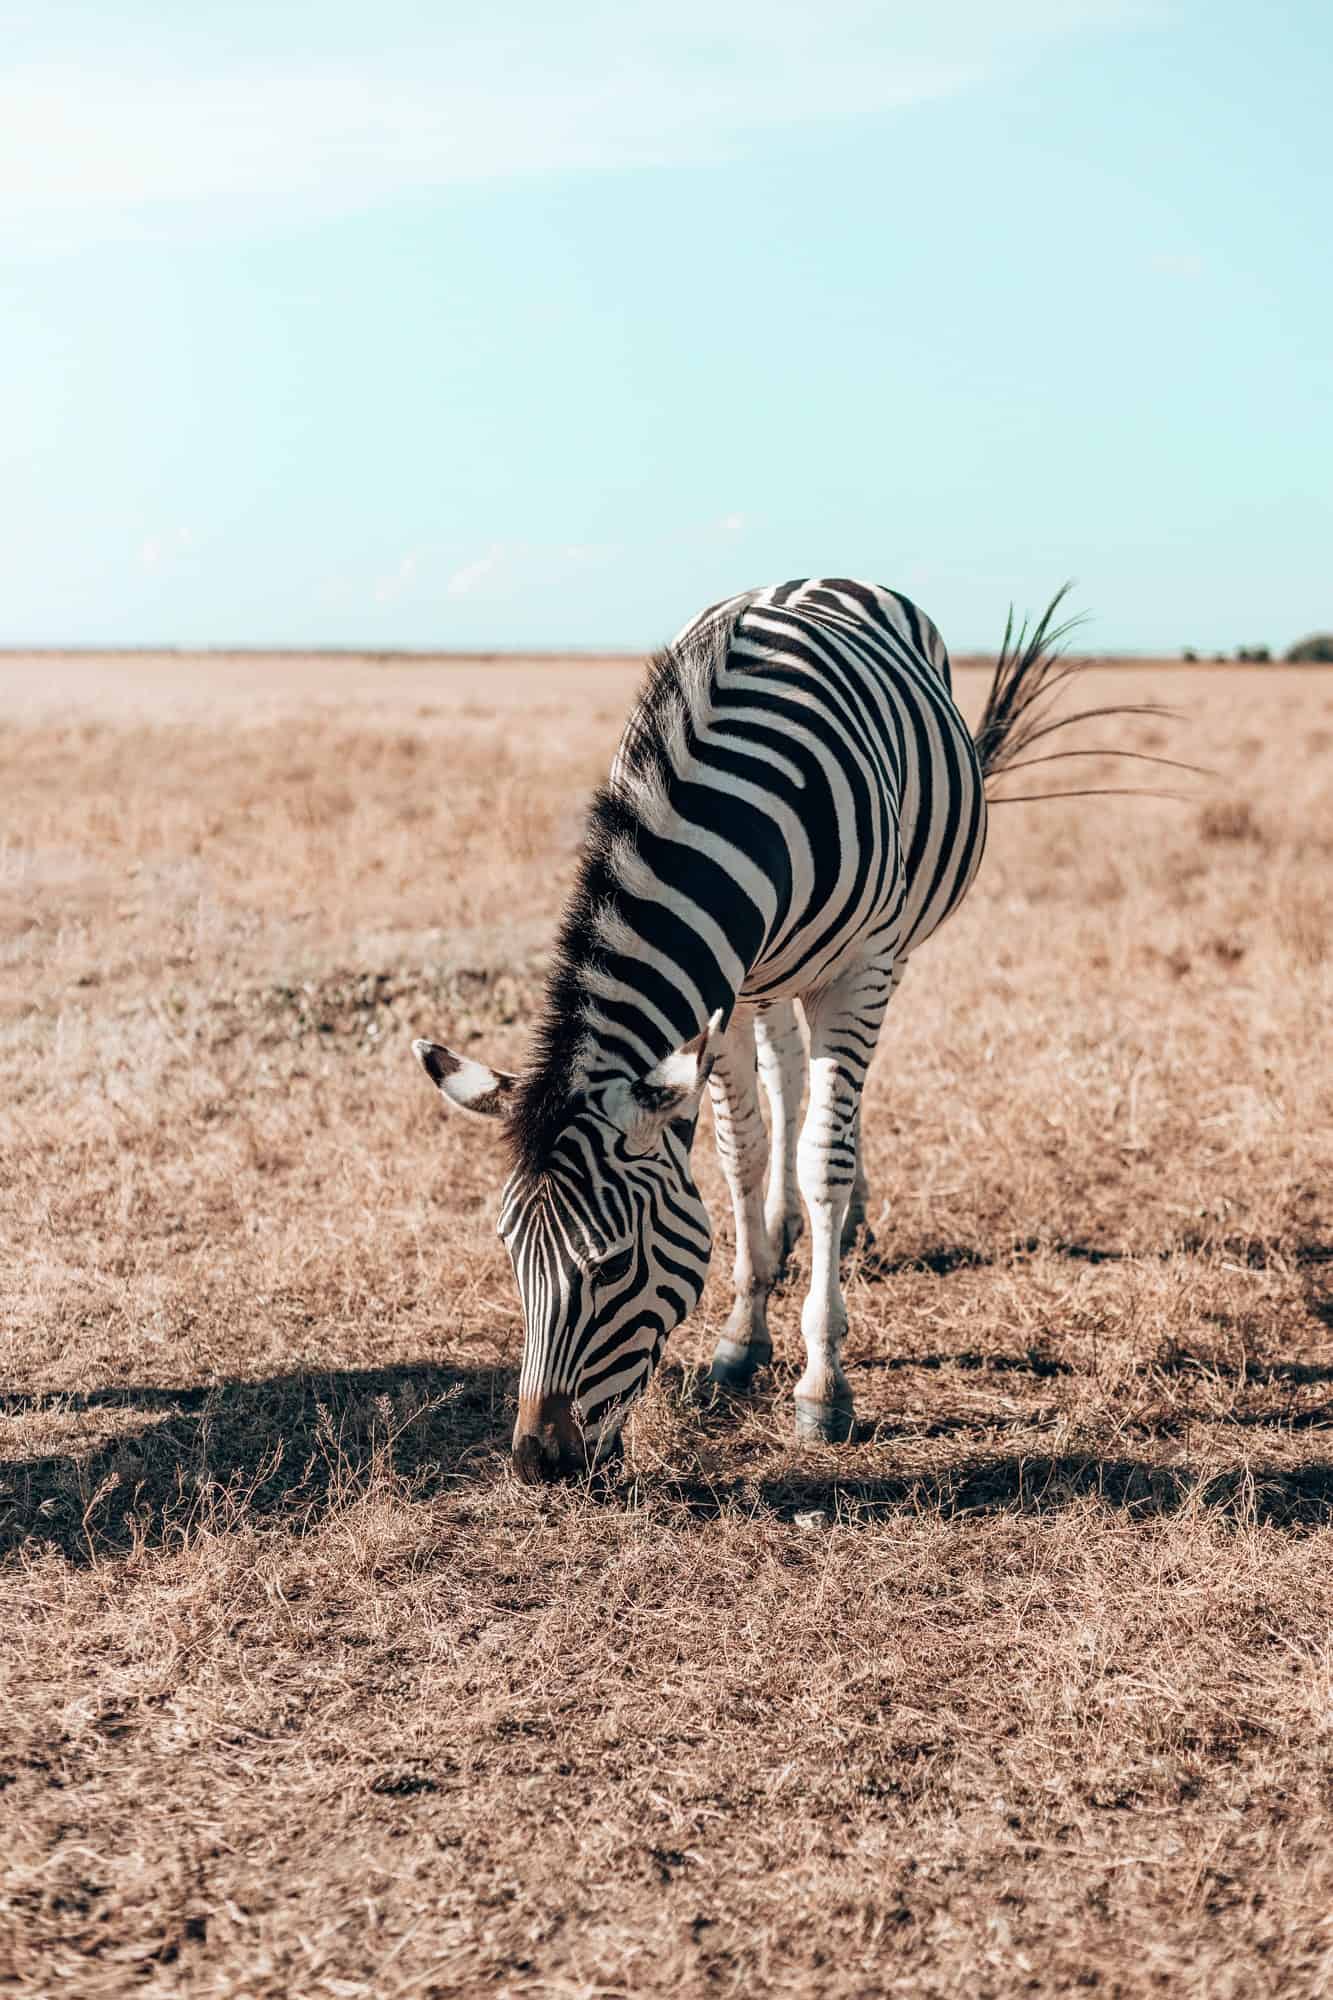 Cute zebra on a field